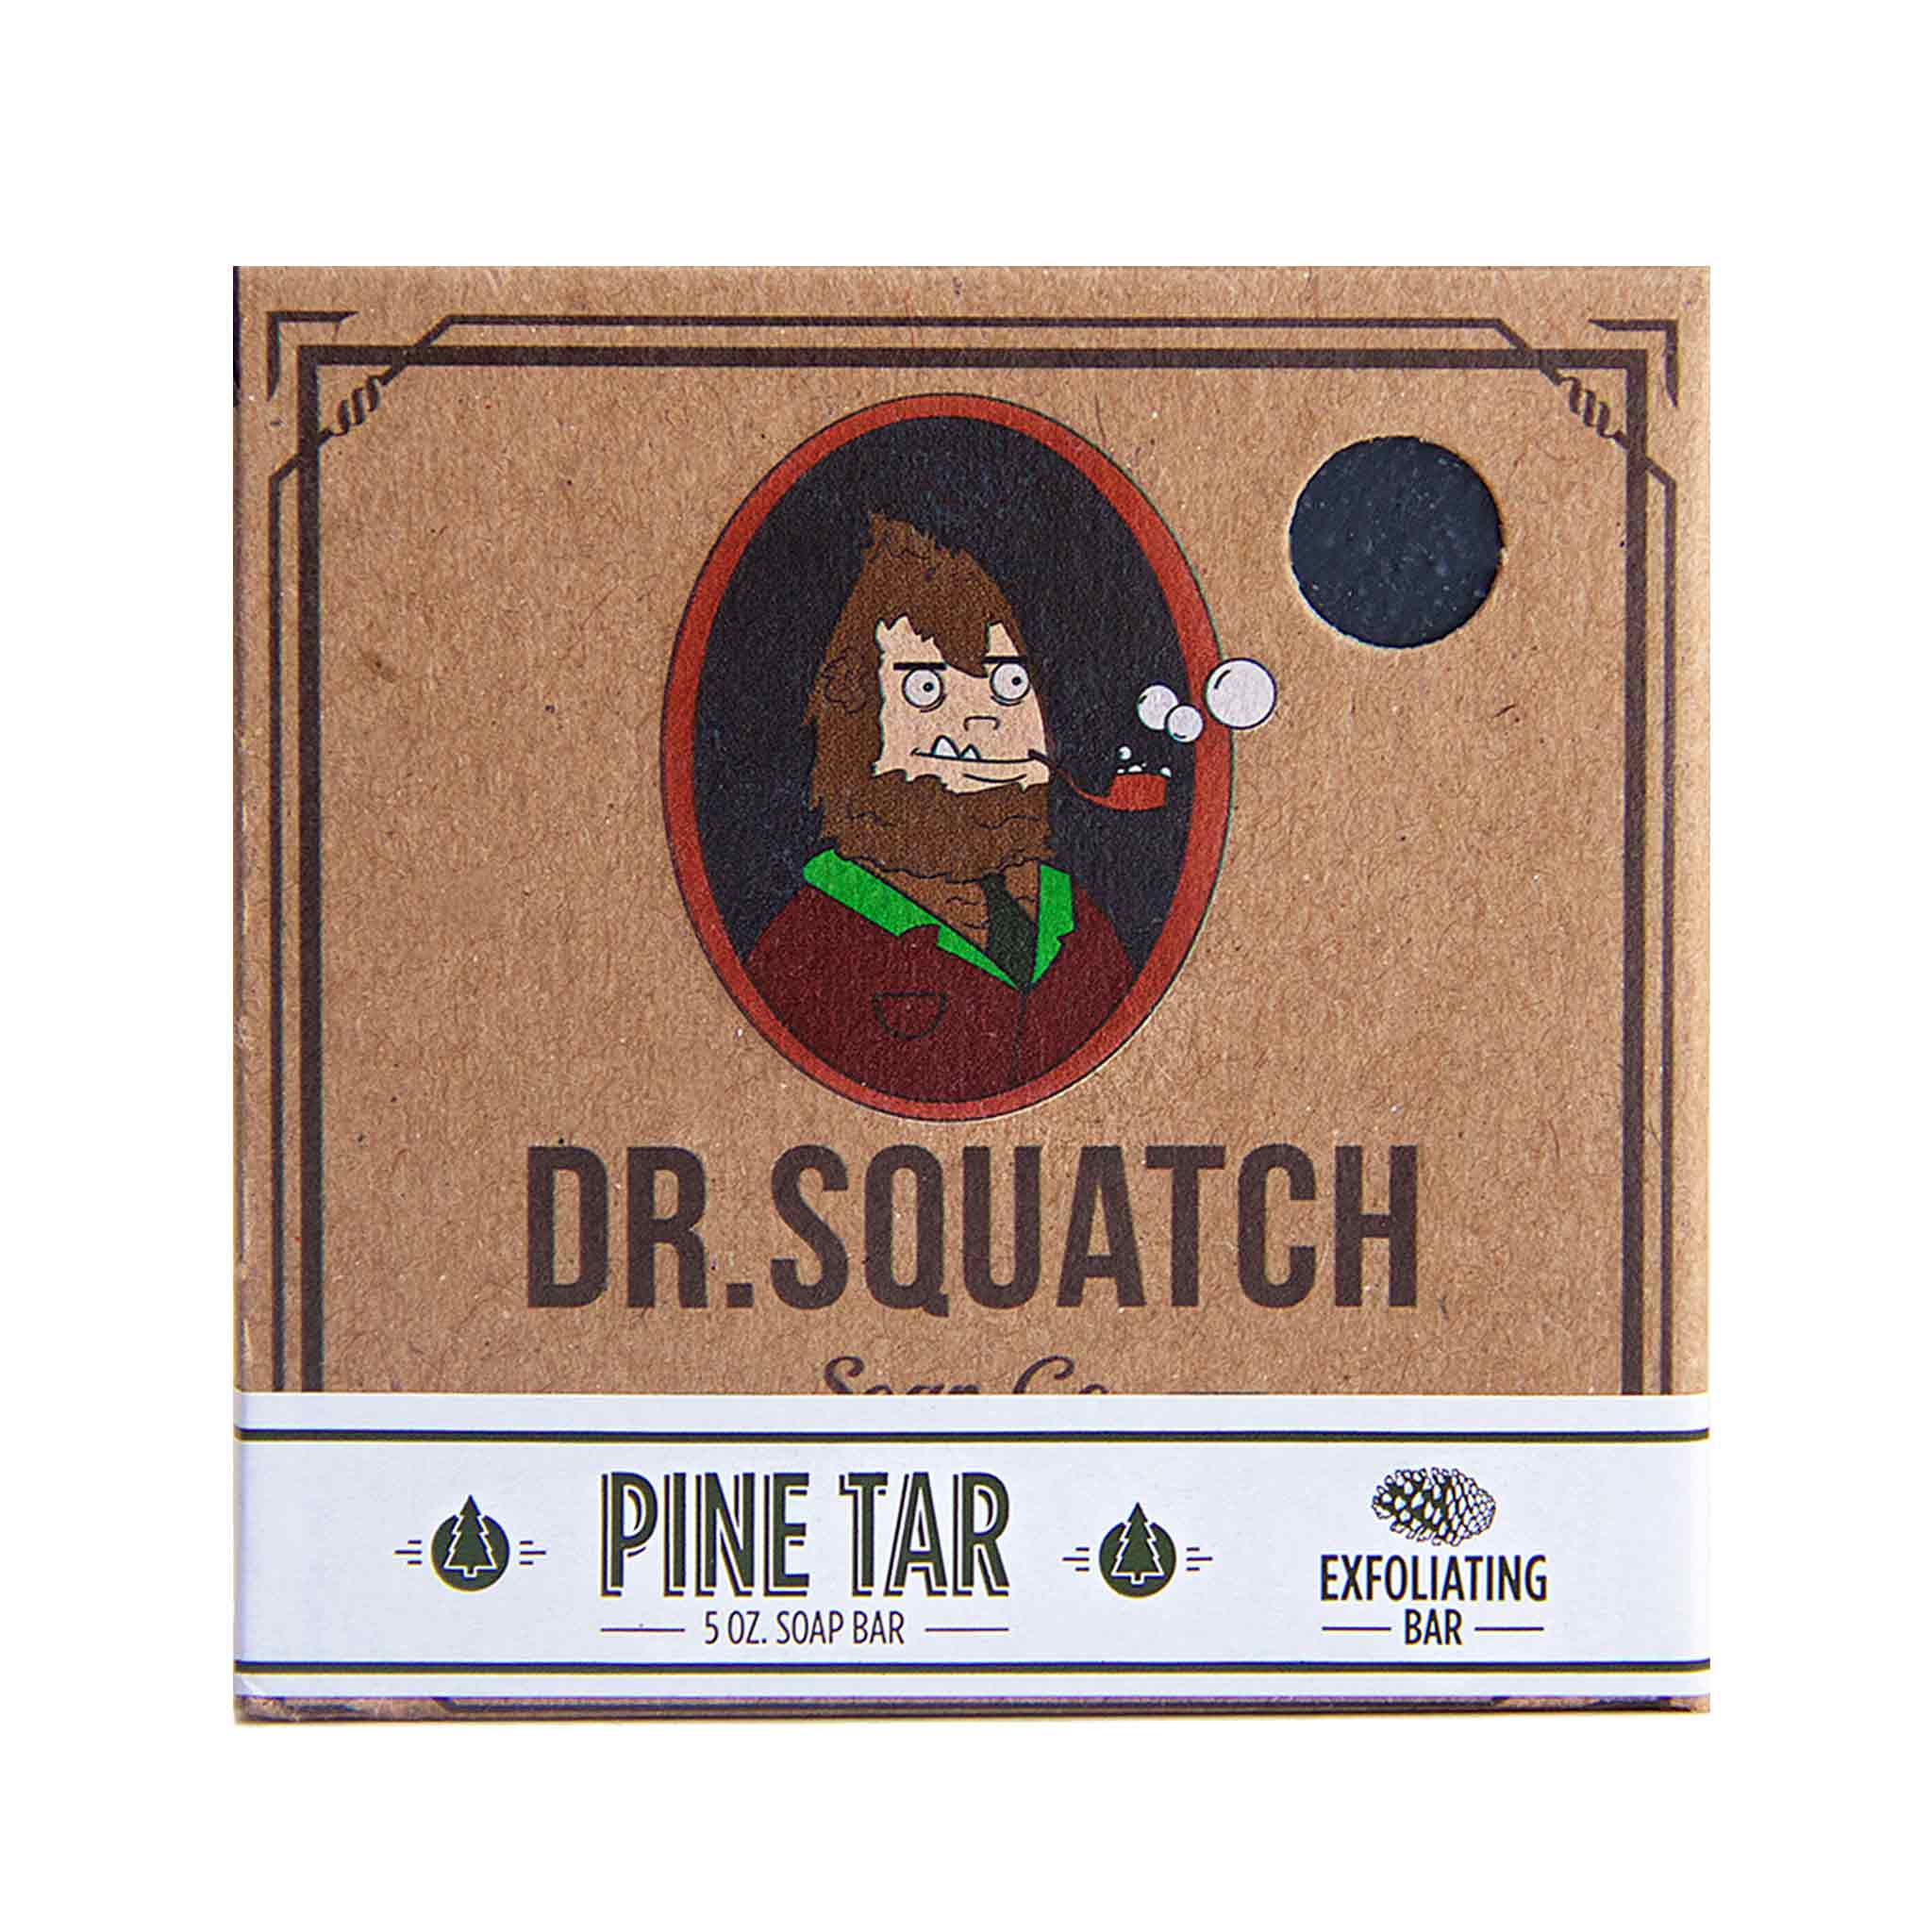 Dr. Squatch Bar Soap, Natural, Men's, Pine Tar 5 oz, Shop